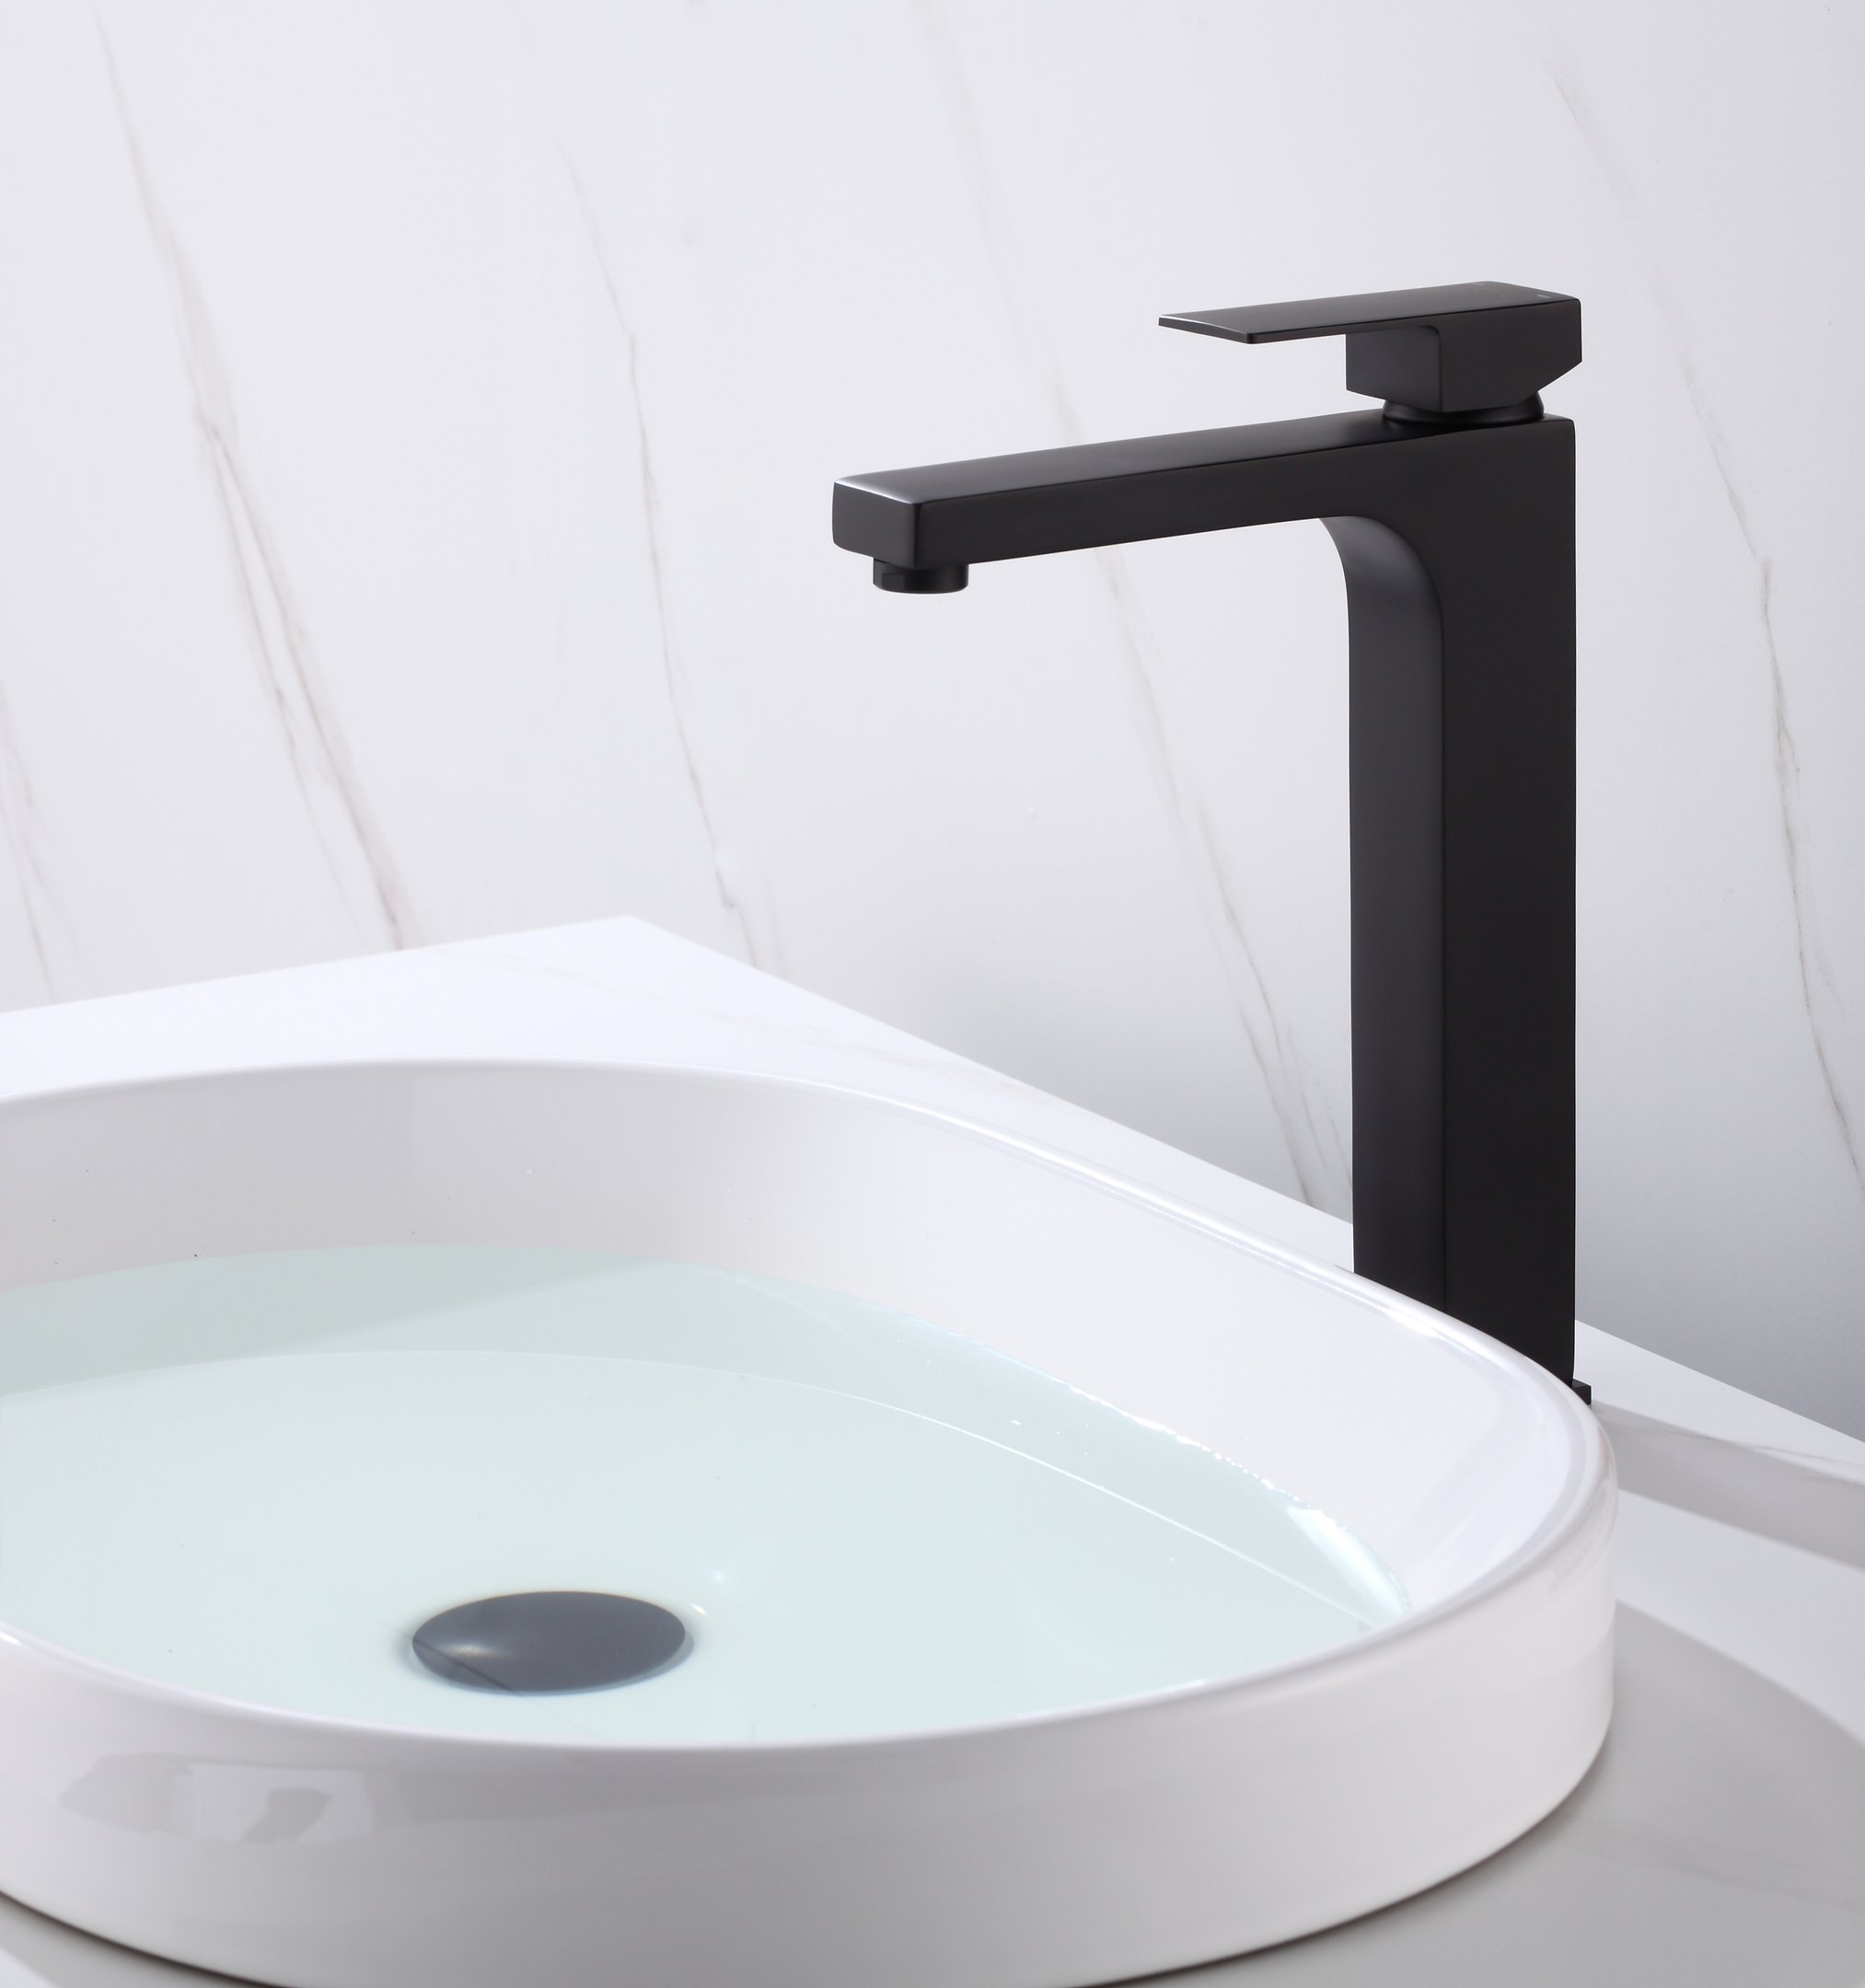 Torneira Monocomando Preto Quadrada Banheiro Lavabo Bica Alta Luxo Inovartte In23 - 5